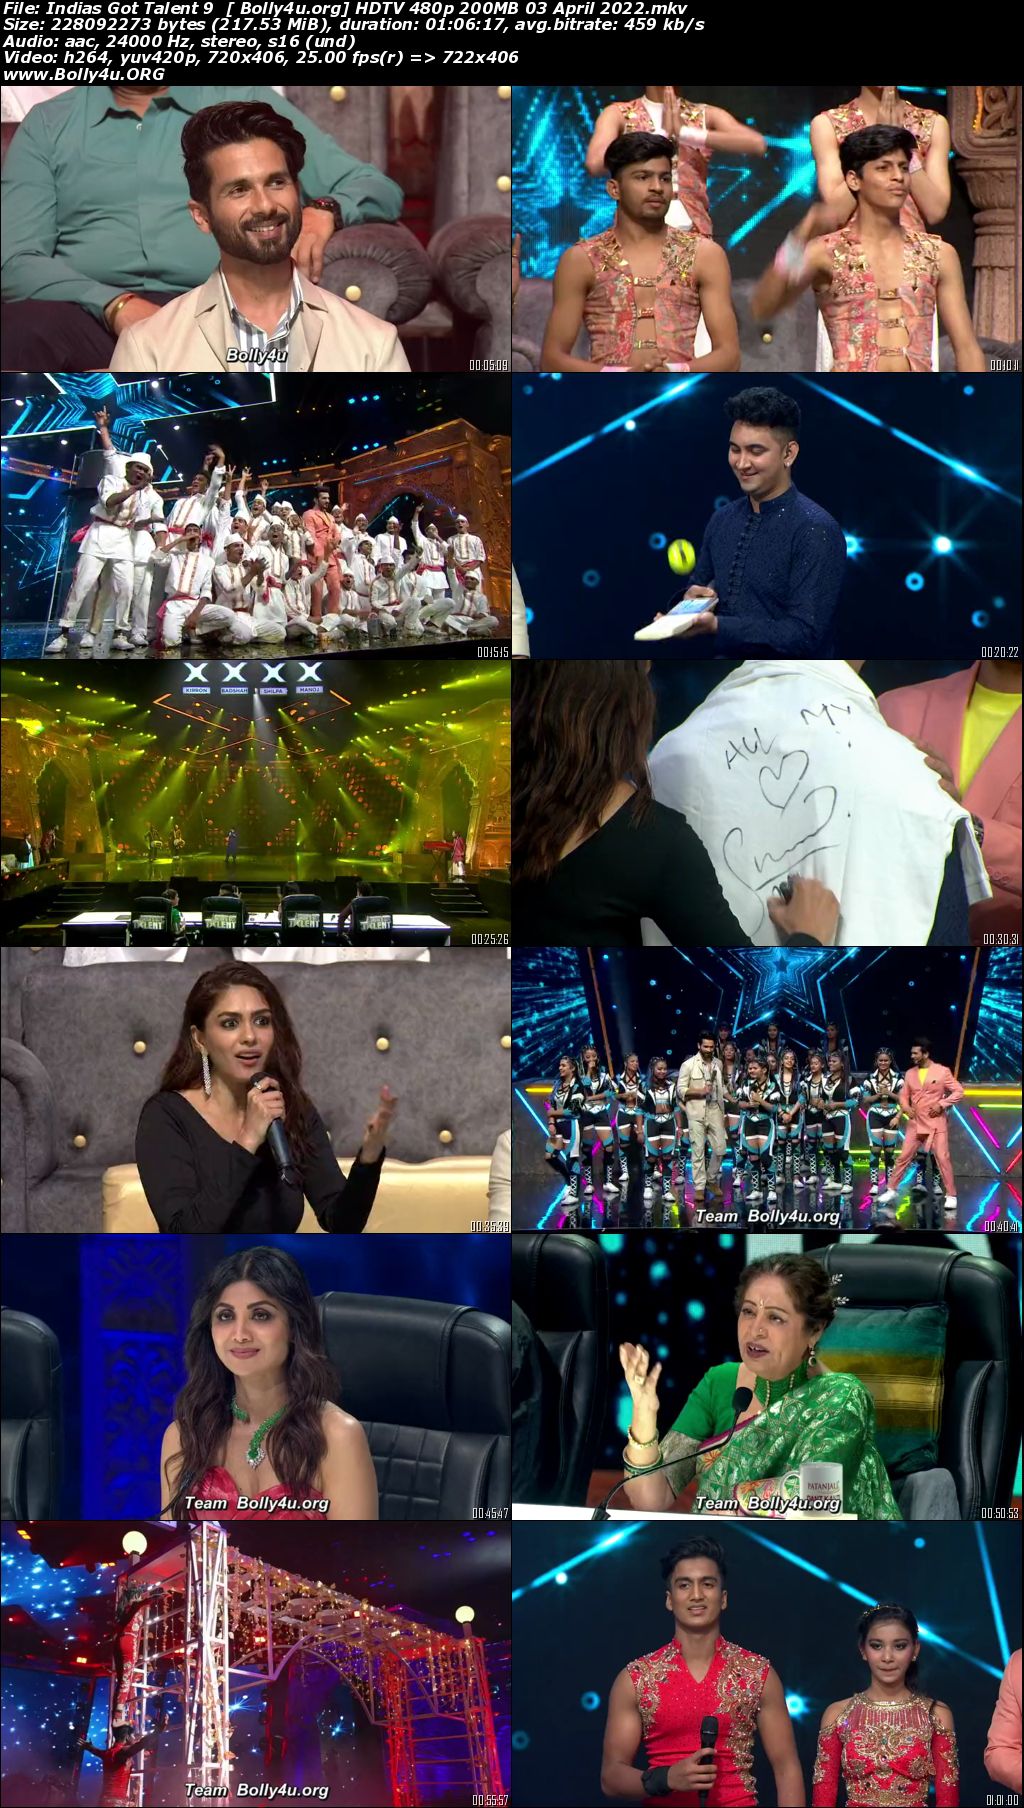 Indias Got Talent 9 HDTV 480p 200MB 03 April 2022 Download